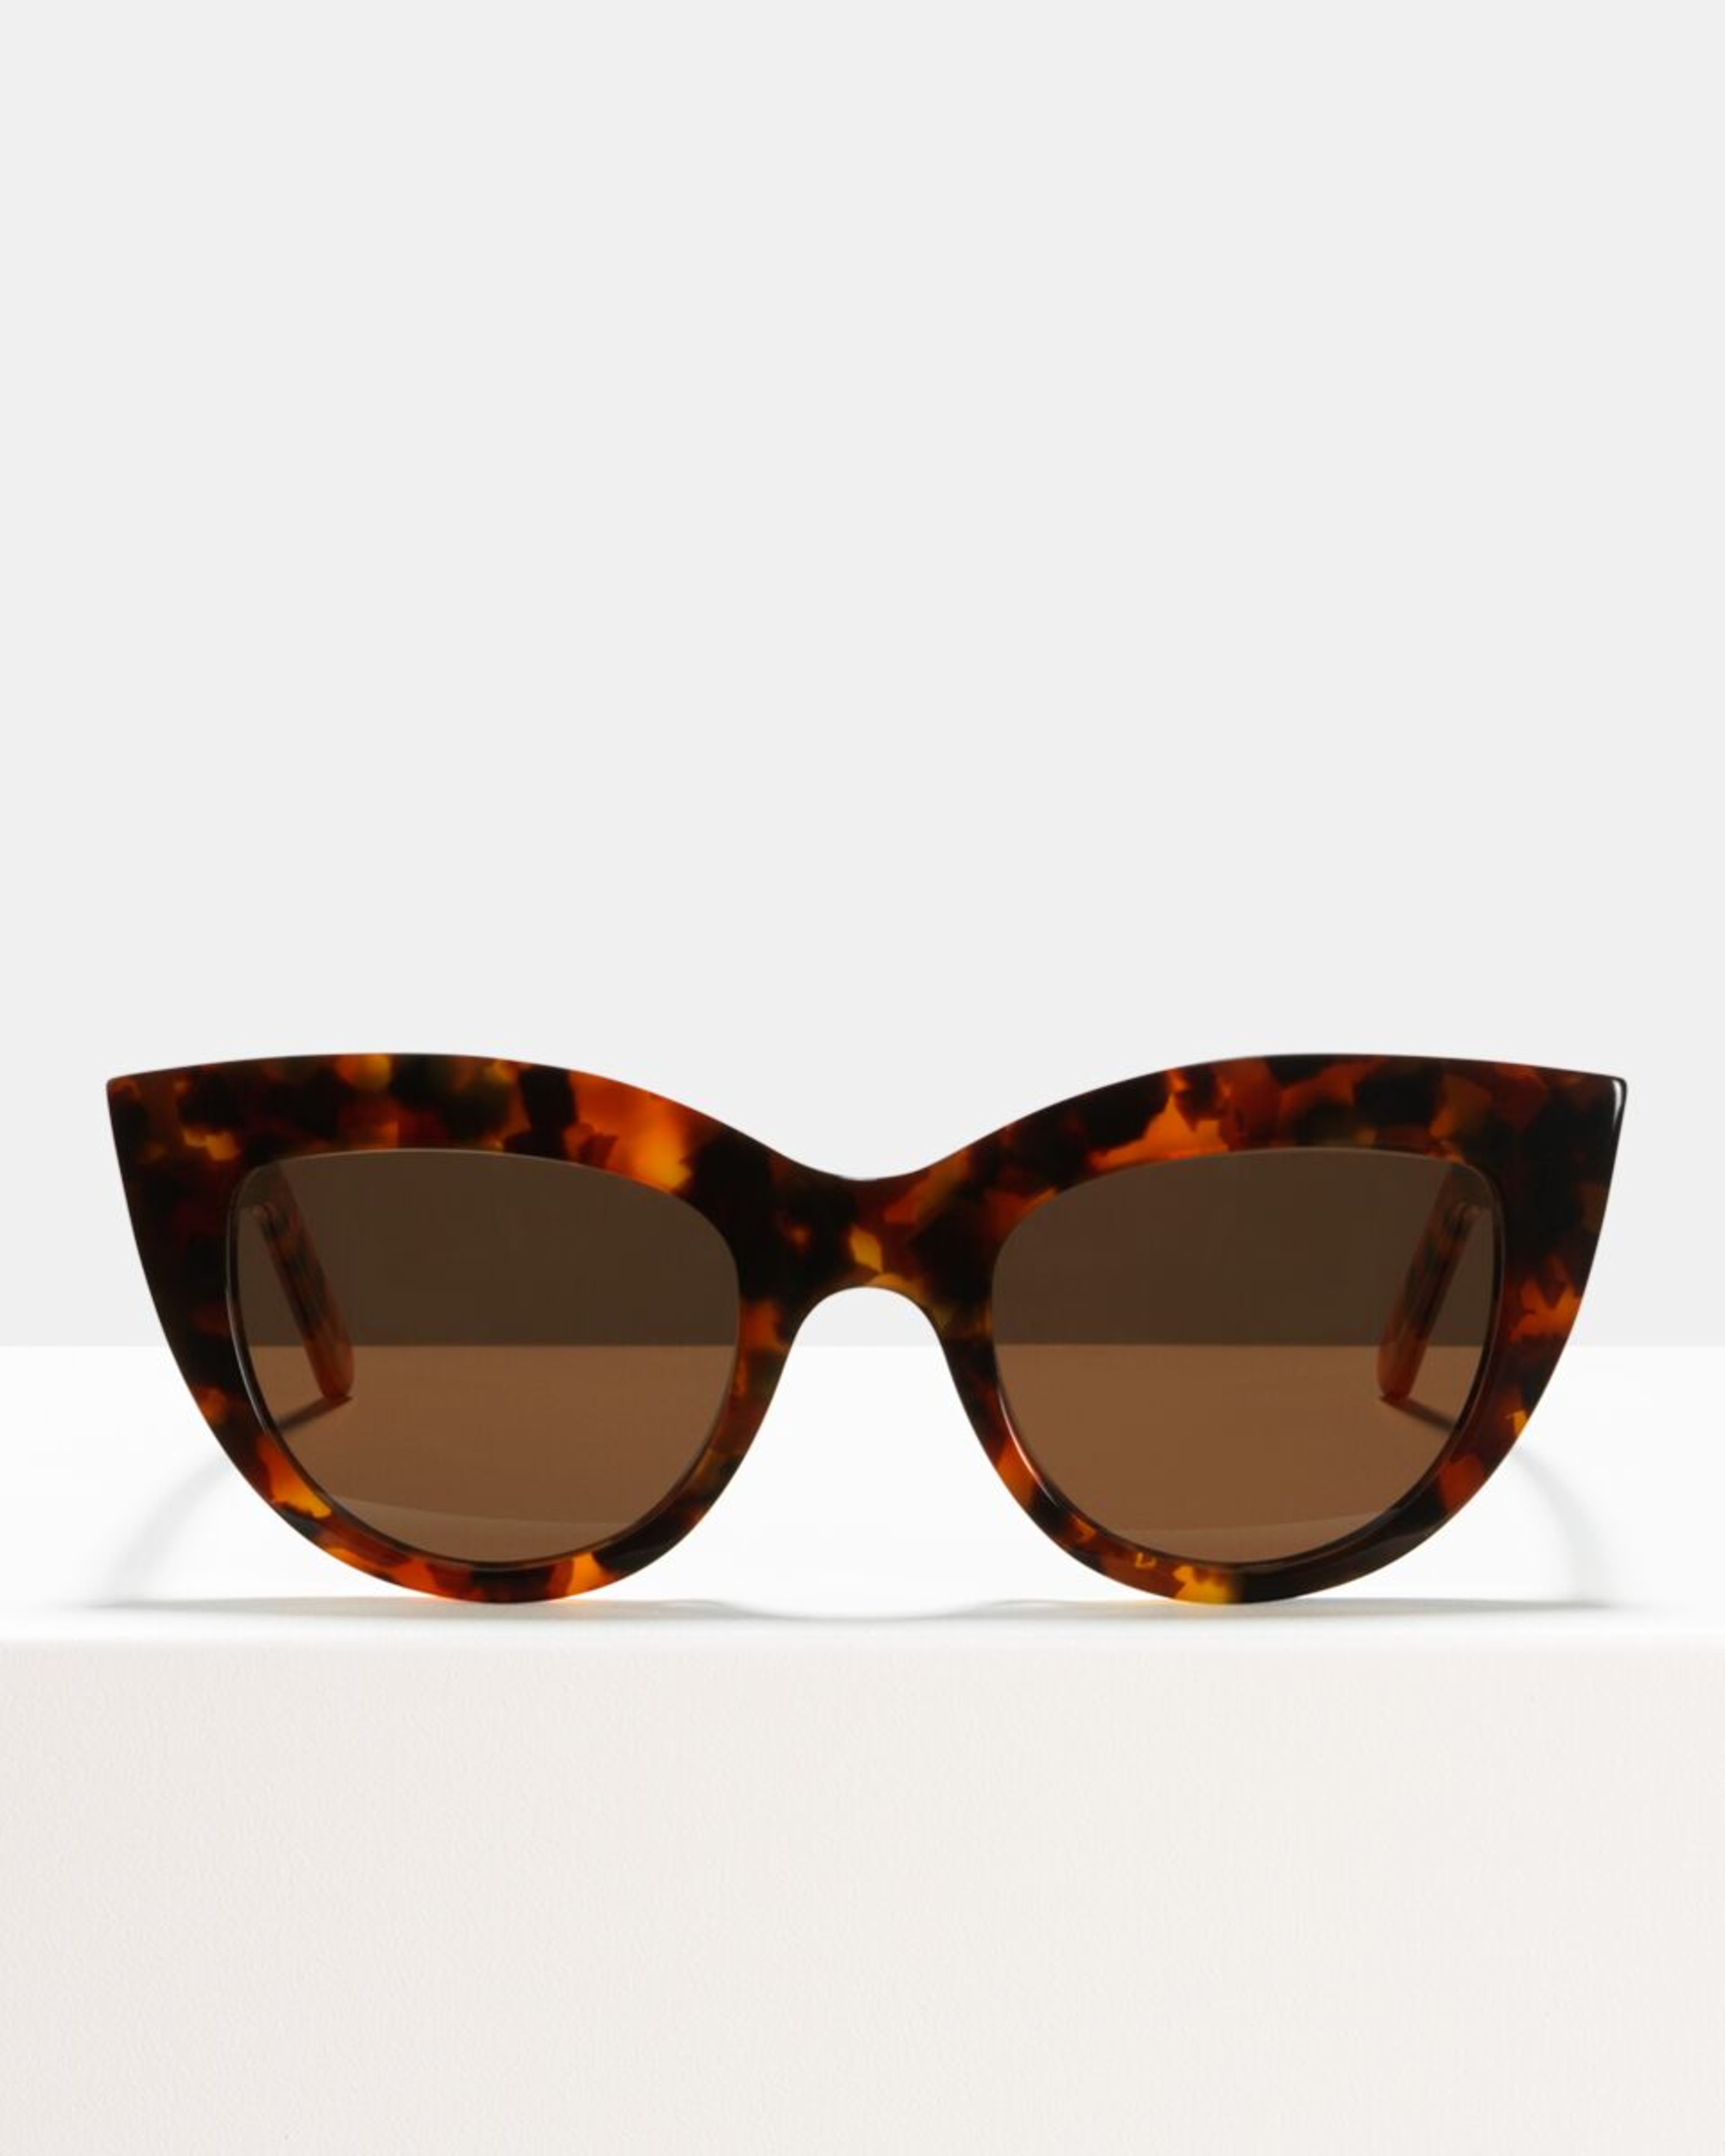 Ace & Tate Sunglasses |  Acetat in Braun, Orange